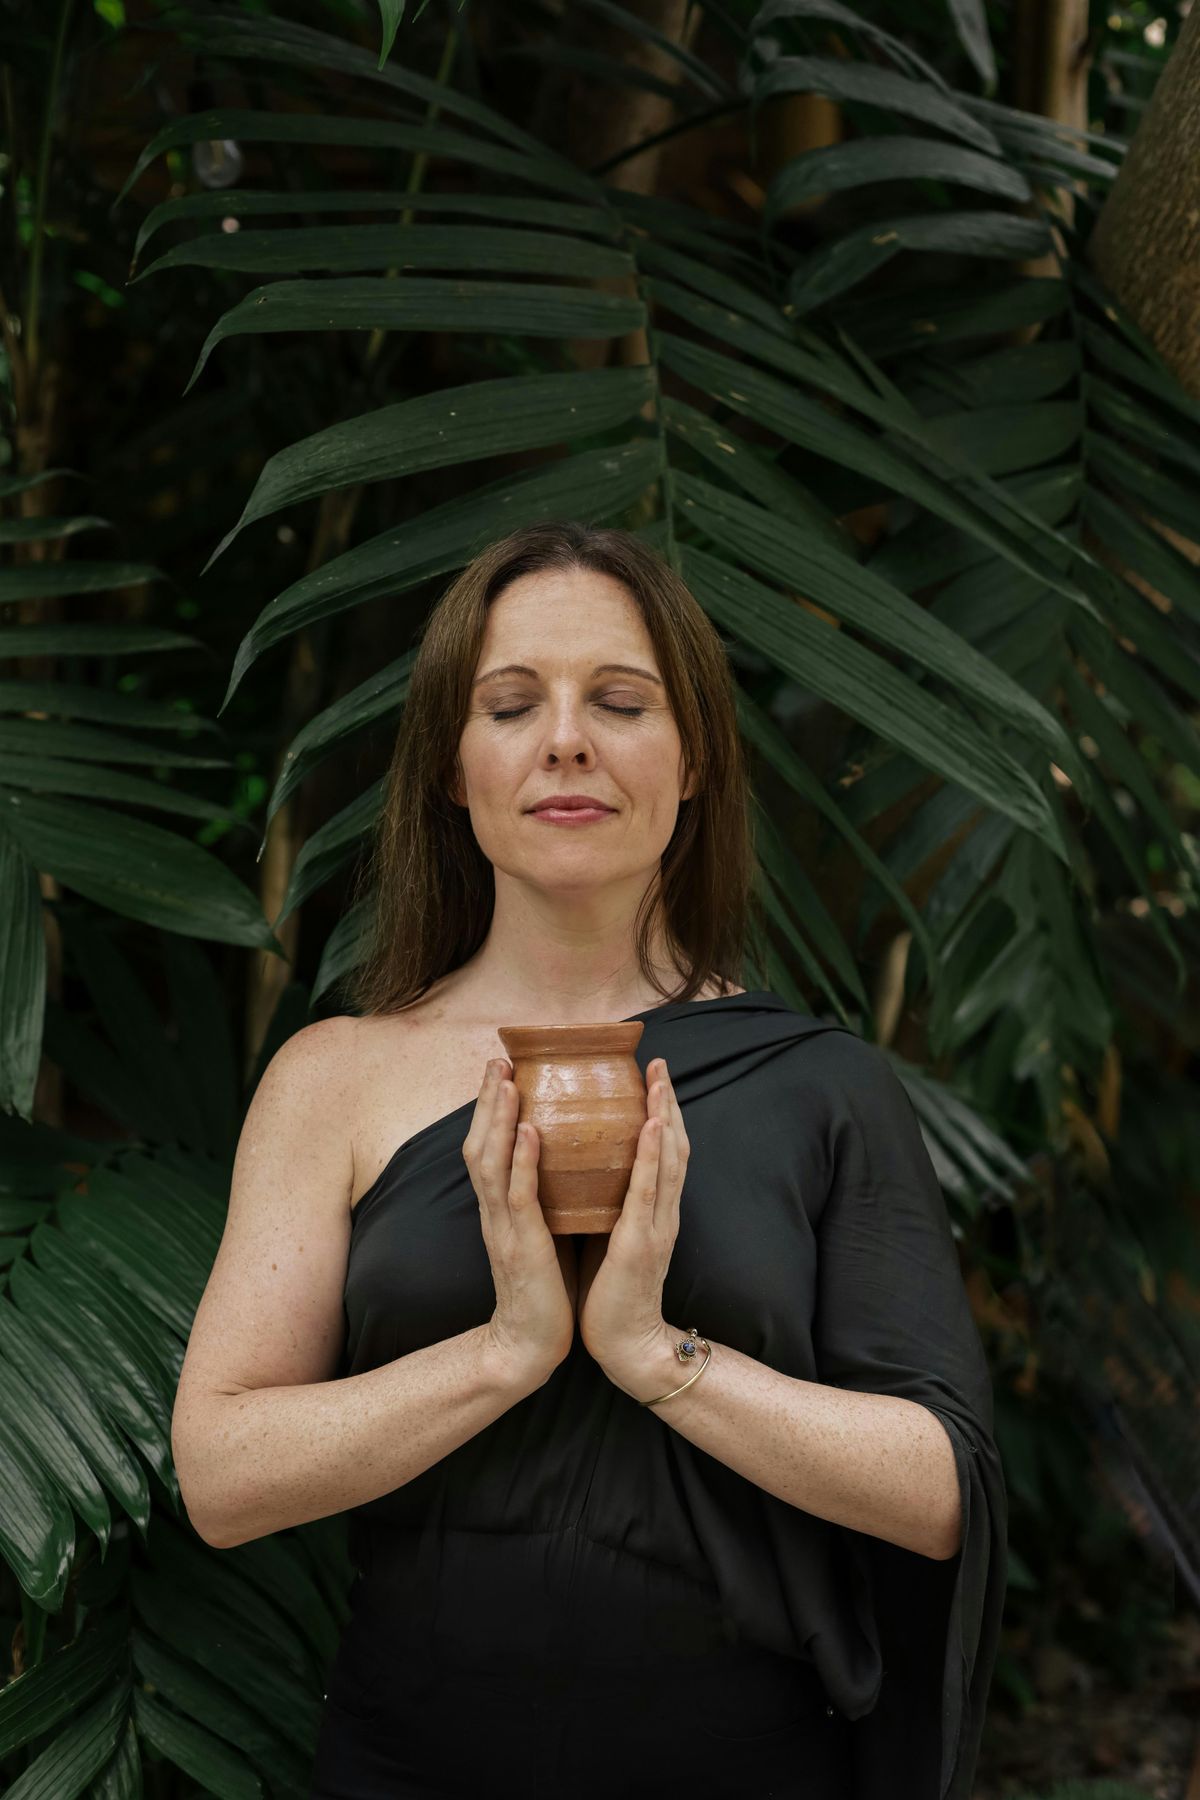 Manifesting Your Dreams - Cacao Ceremony, Sound Healing & Reiki